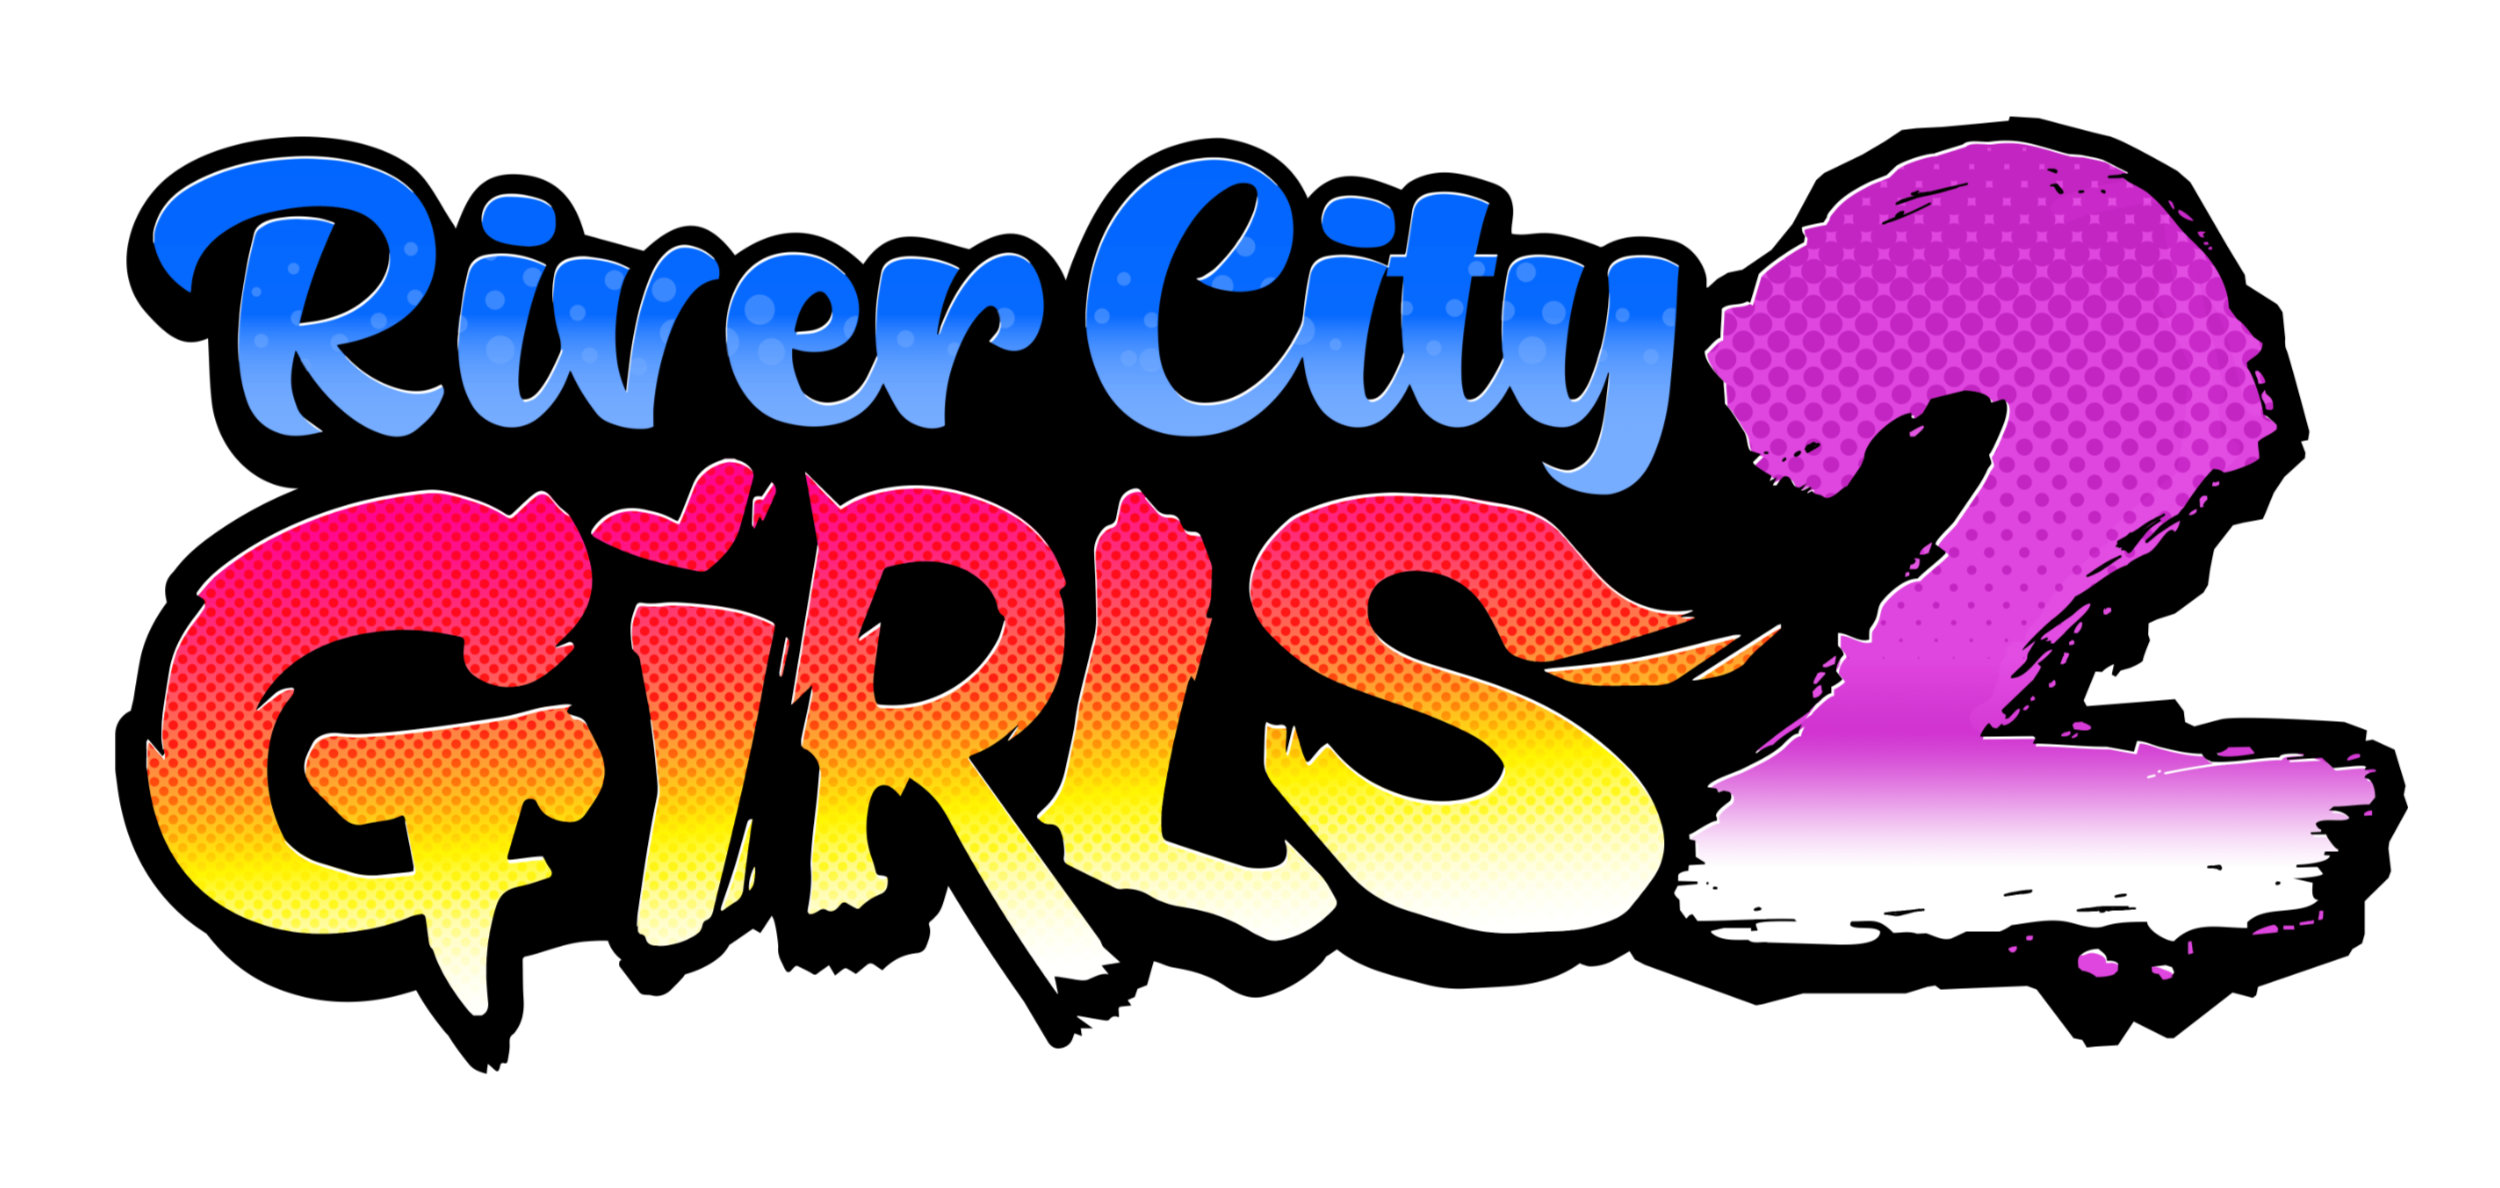 River City Girls 2 Logo 001